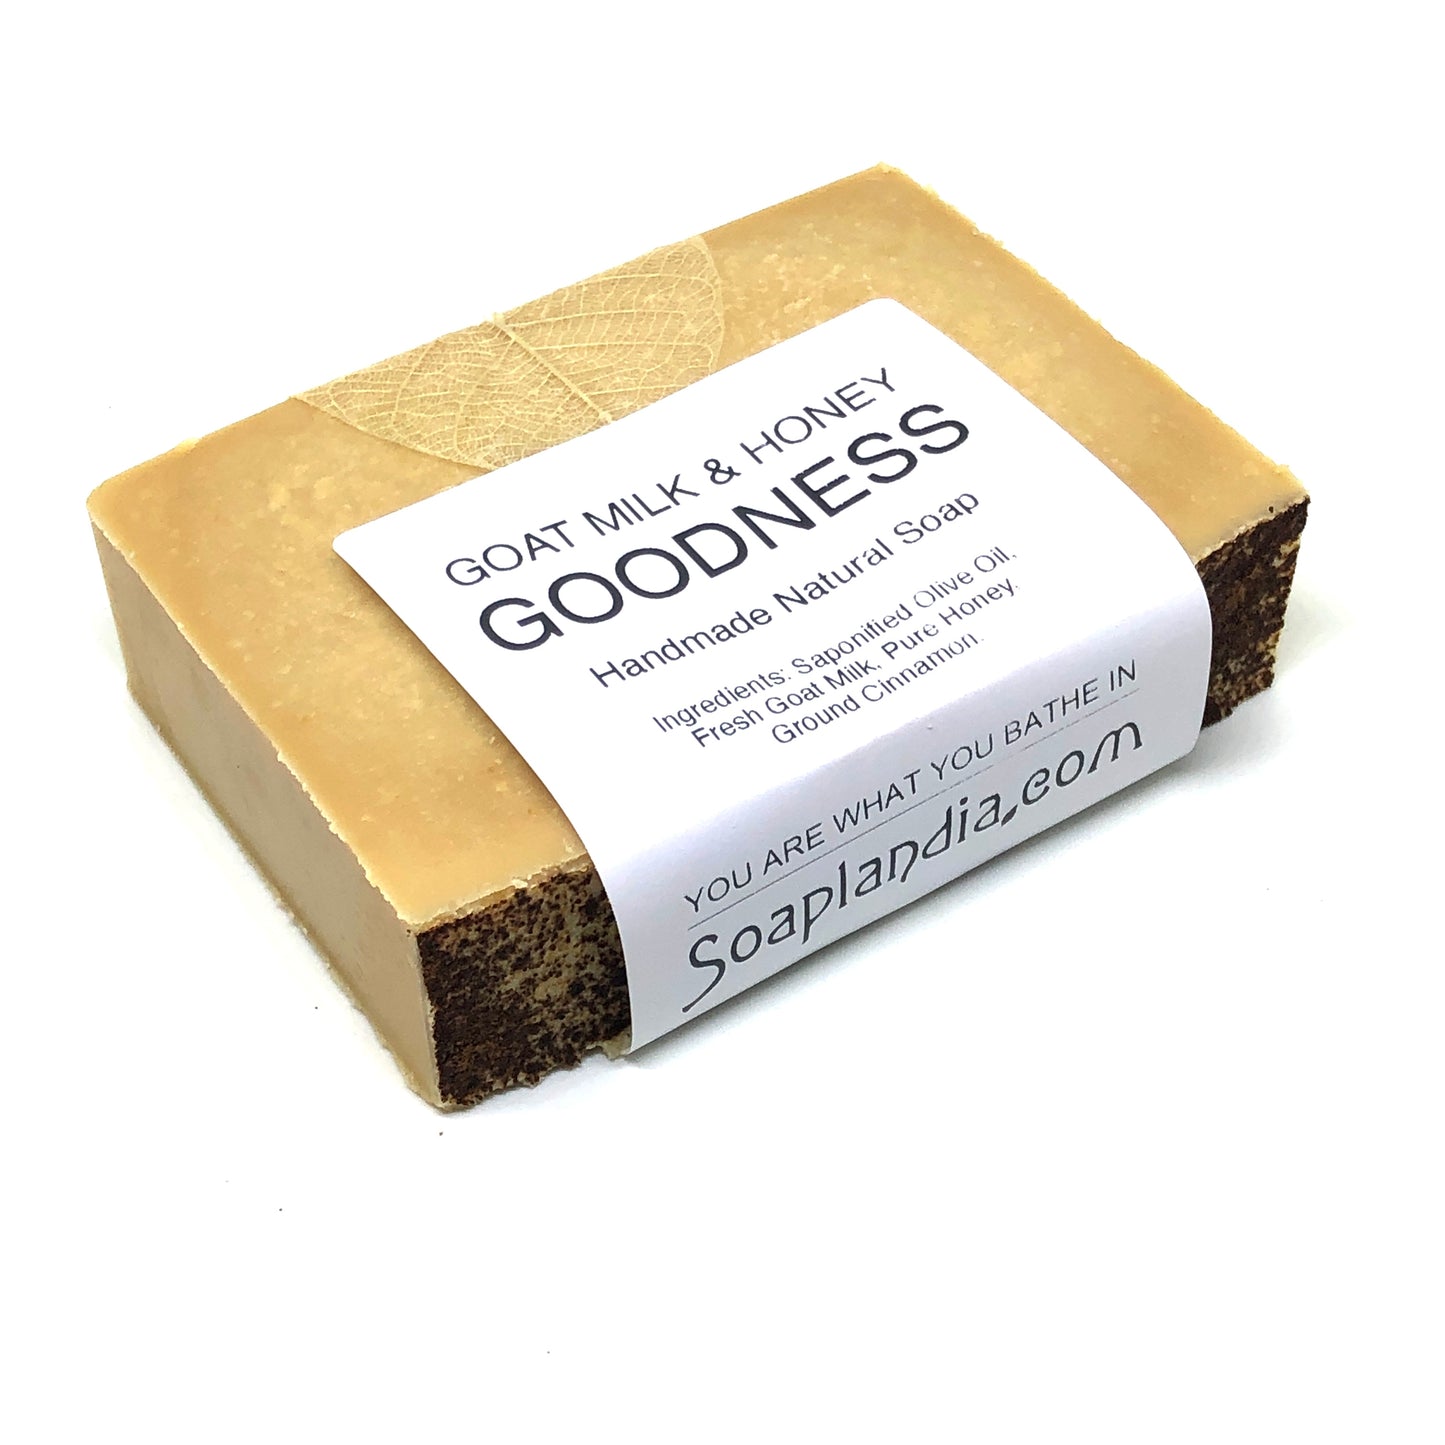 Goat Milk & Honey Goodness Soap (unscented)